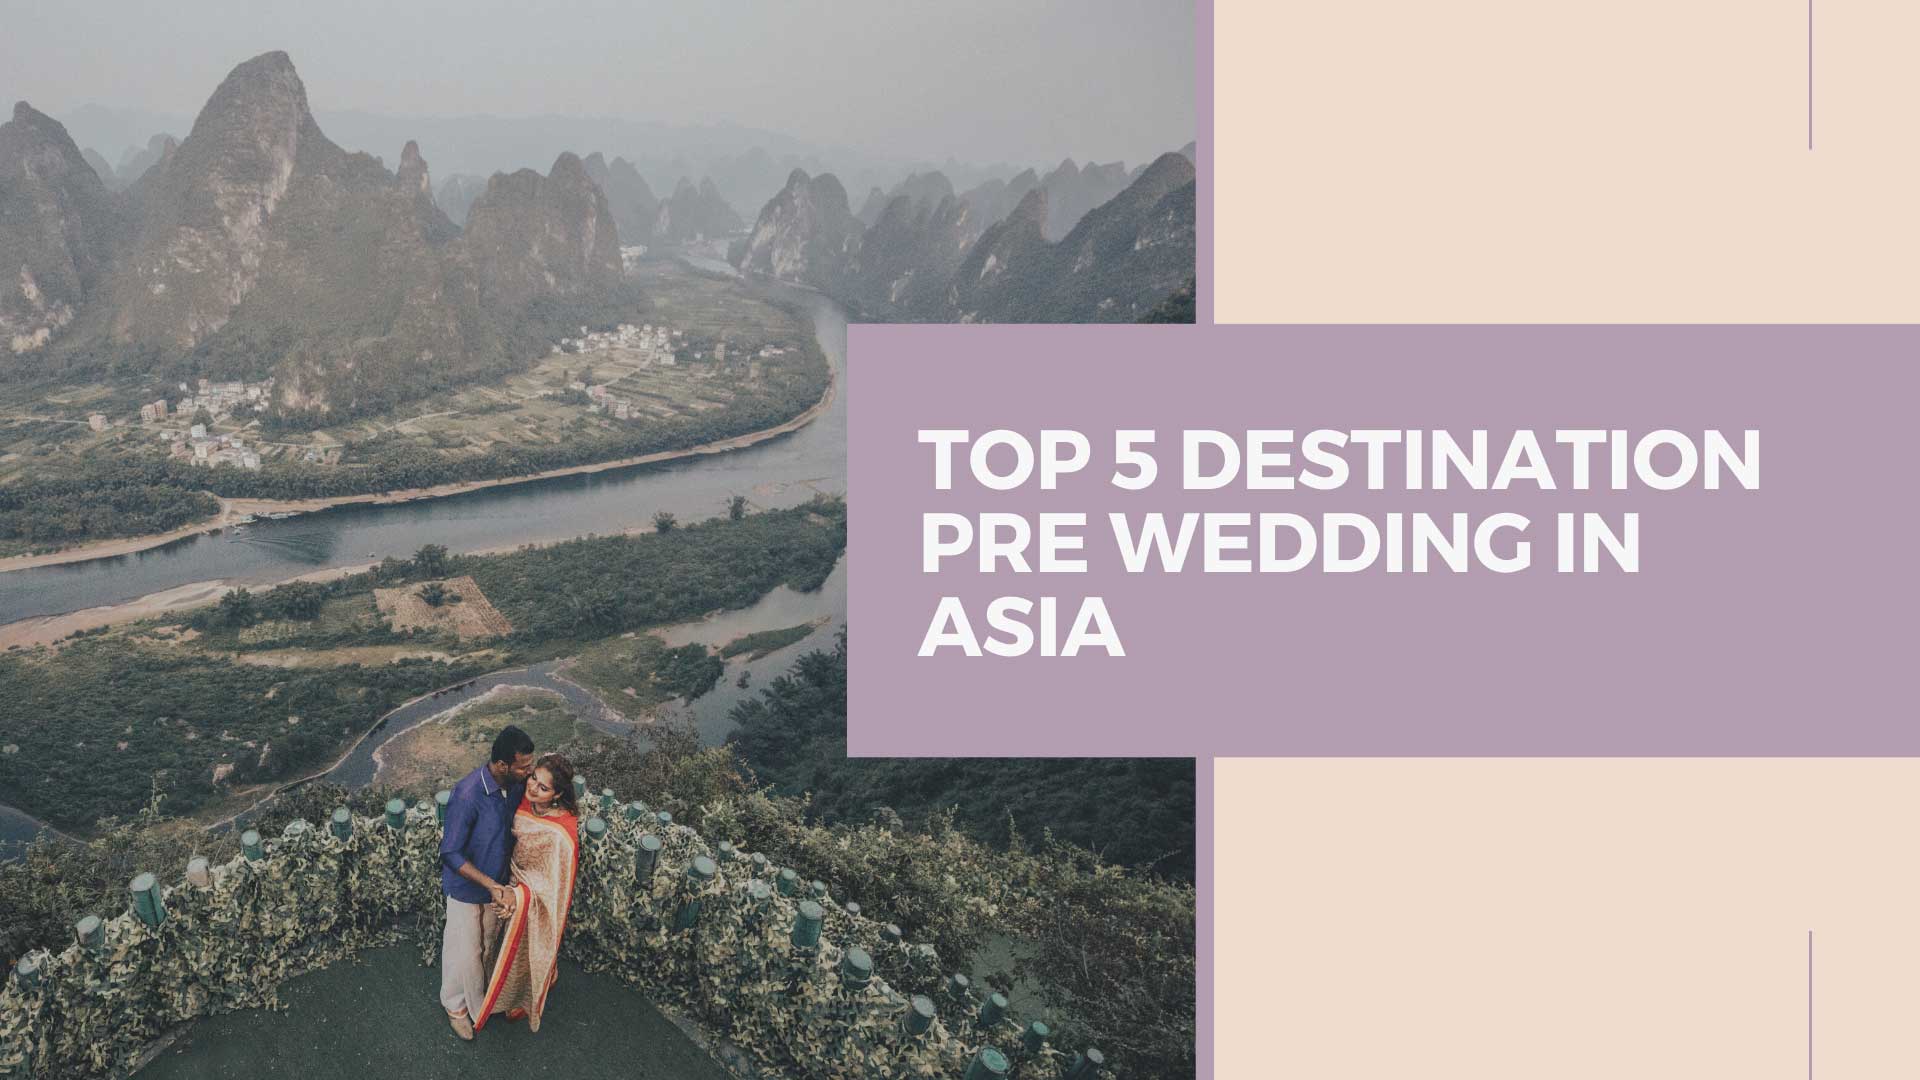 Top 5 Destination Pre Wedding in Asia